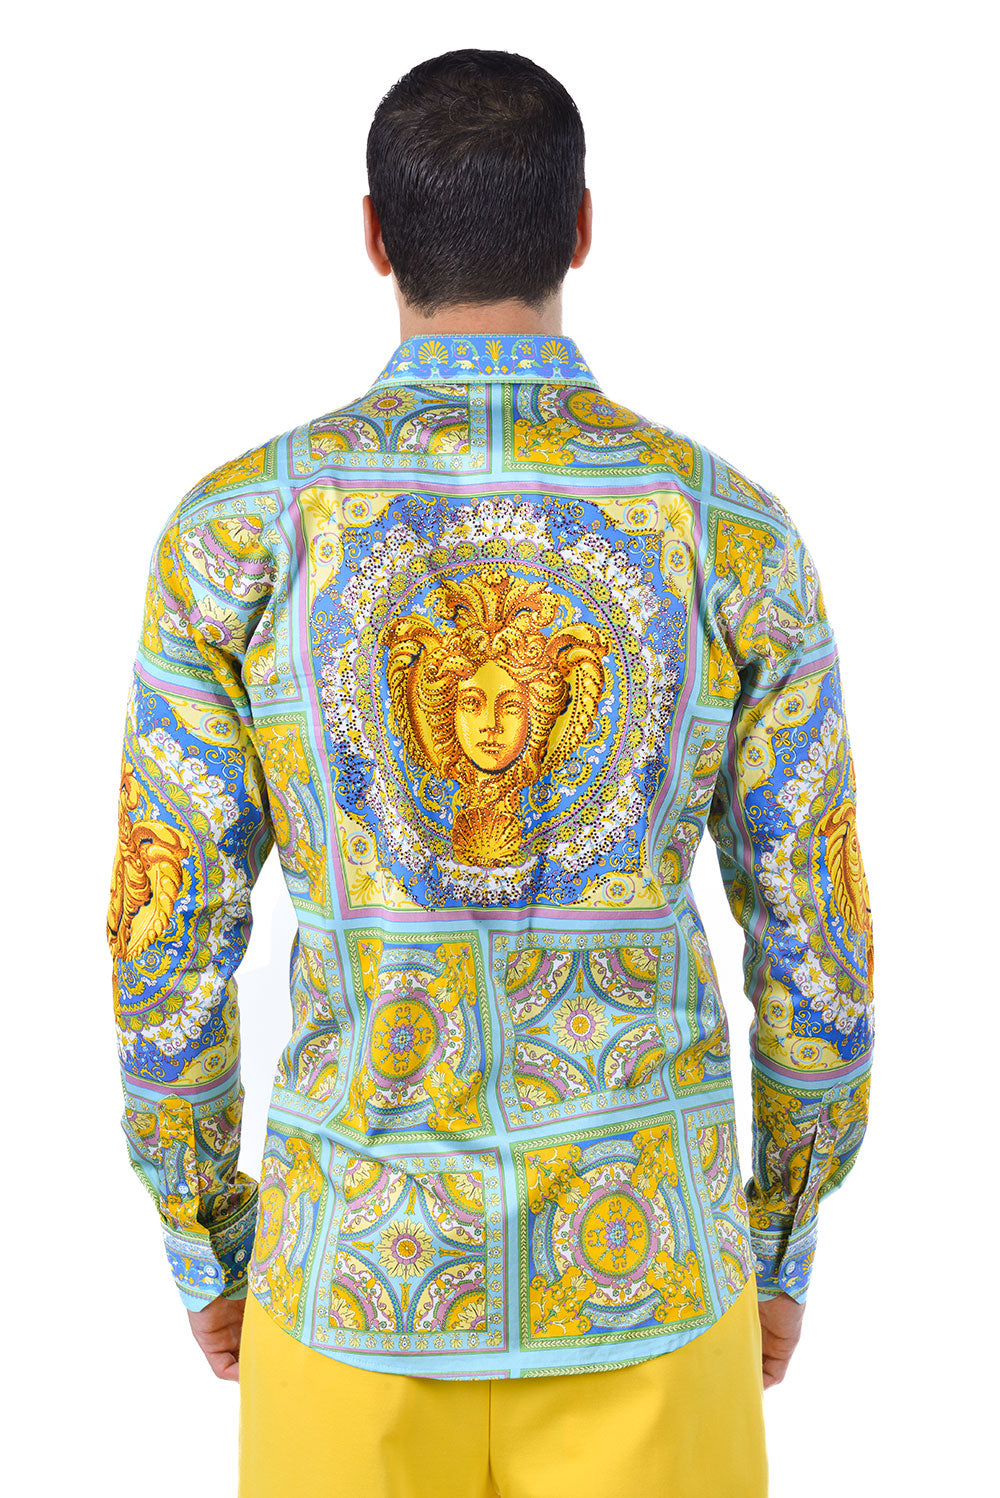 Barabas Men's Rhinestone Medusa Floral Baroque Button Down Shirt SPR13 Sky